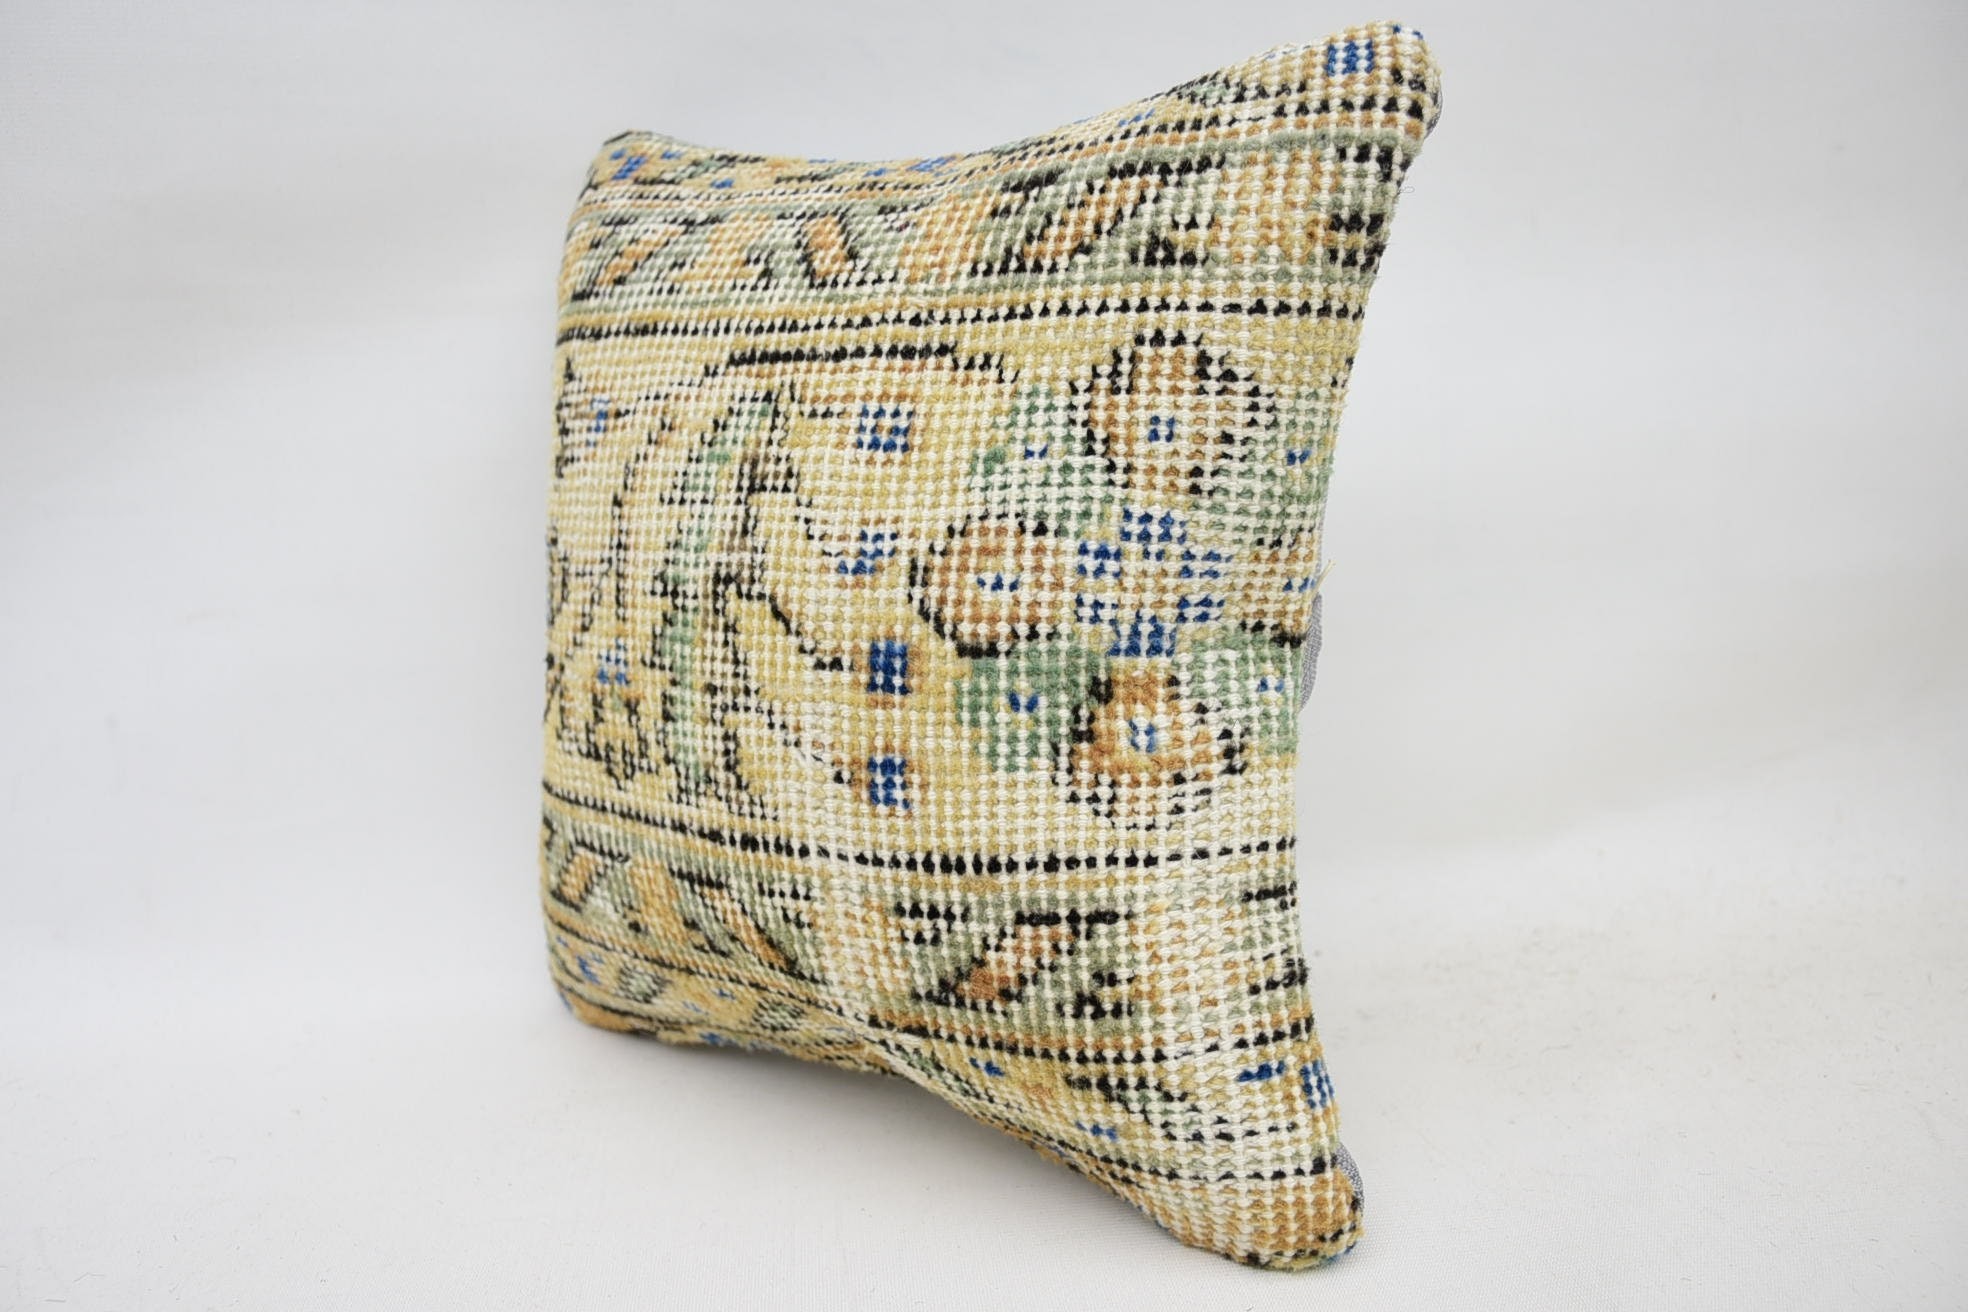 Turkish Kilim Pillow, 12"x12" Yellow Pillow Sham, Comfy Throw Pillow Cover, Ethnical Kilim Rug Pillow, Antique Pillows